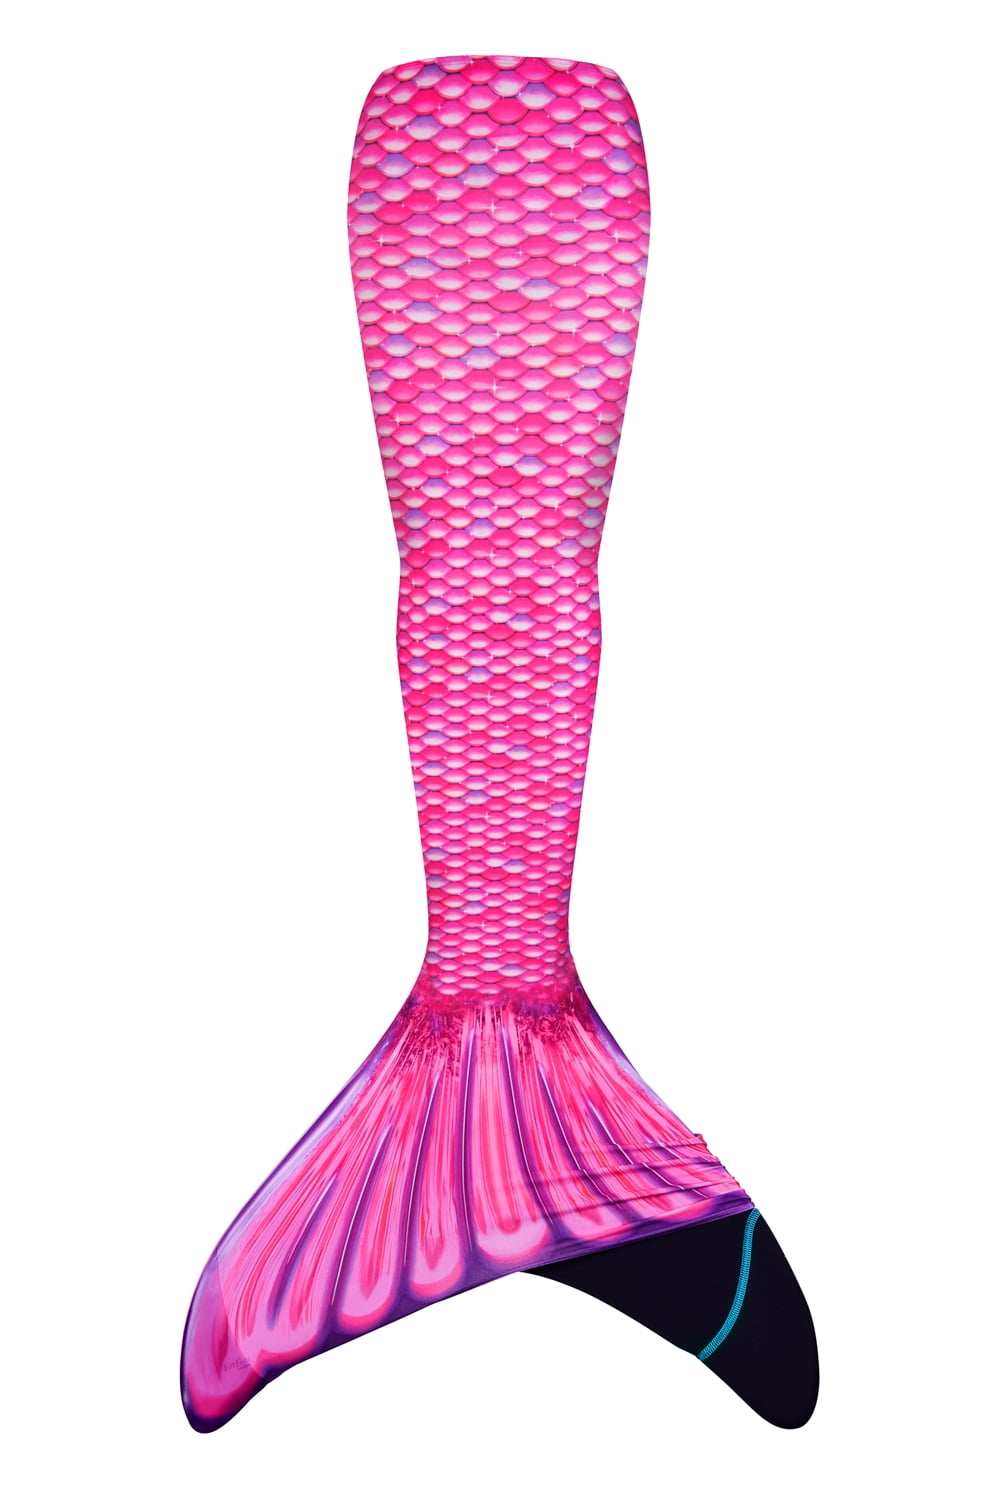 Aquatic Adventures Kids Pink Mermaid Tail Swim Training Monofin Fin Flippers NEW 